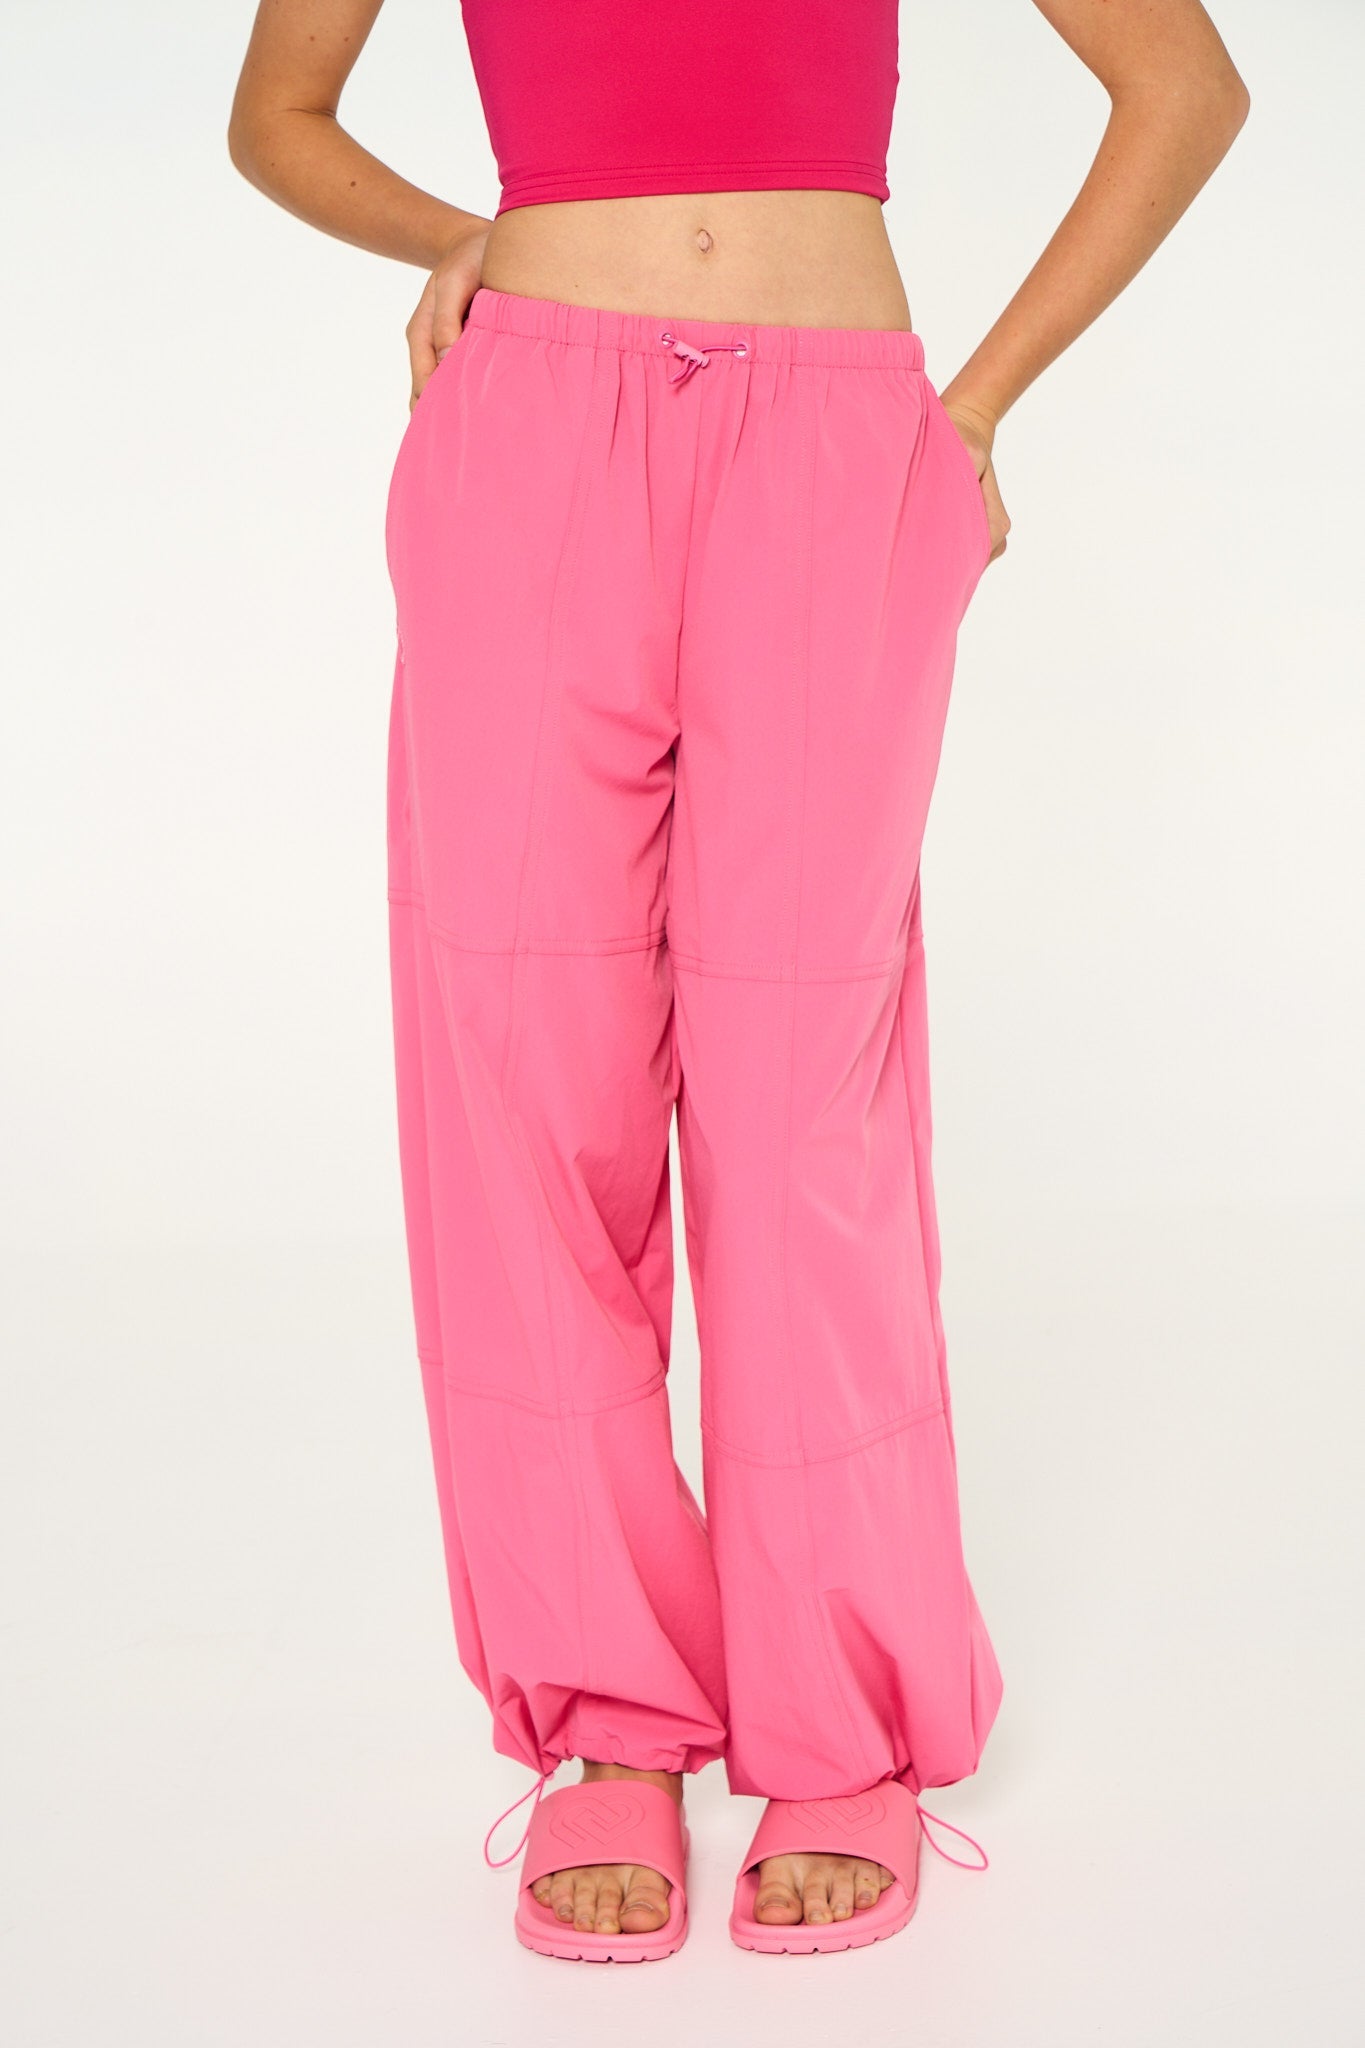 Junie Toggle Parachute Pants - Hot Pink - Closet Candy Boutique